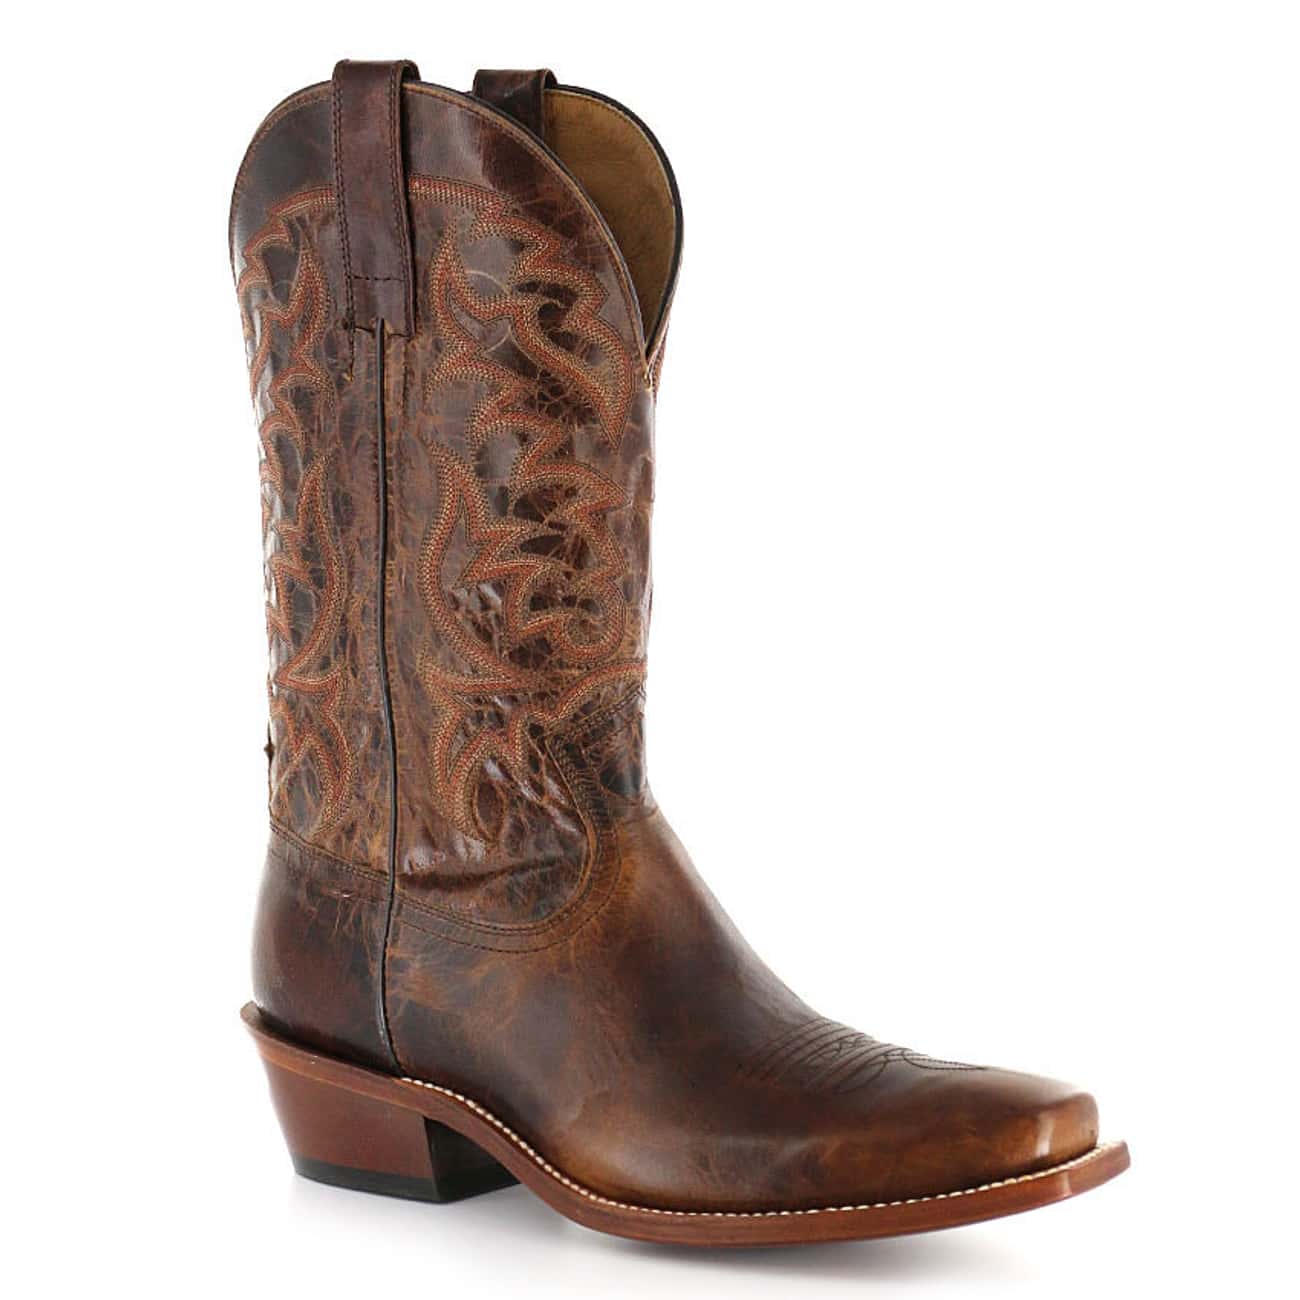 Western Cowboy Boots | List of 50+ Best Cowboy Boot Brands